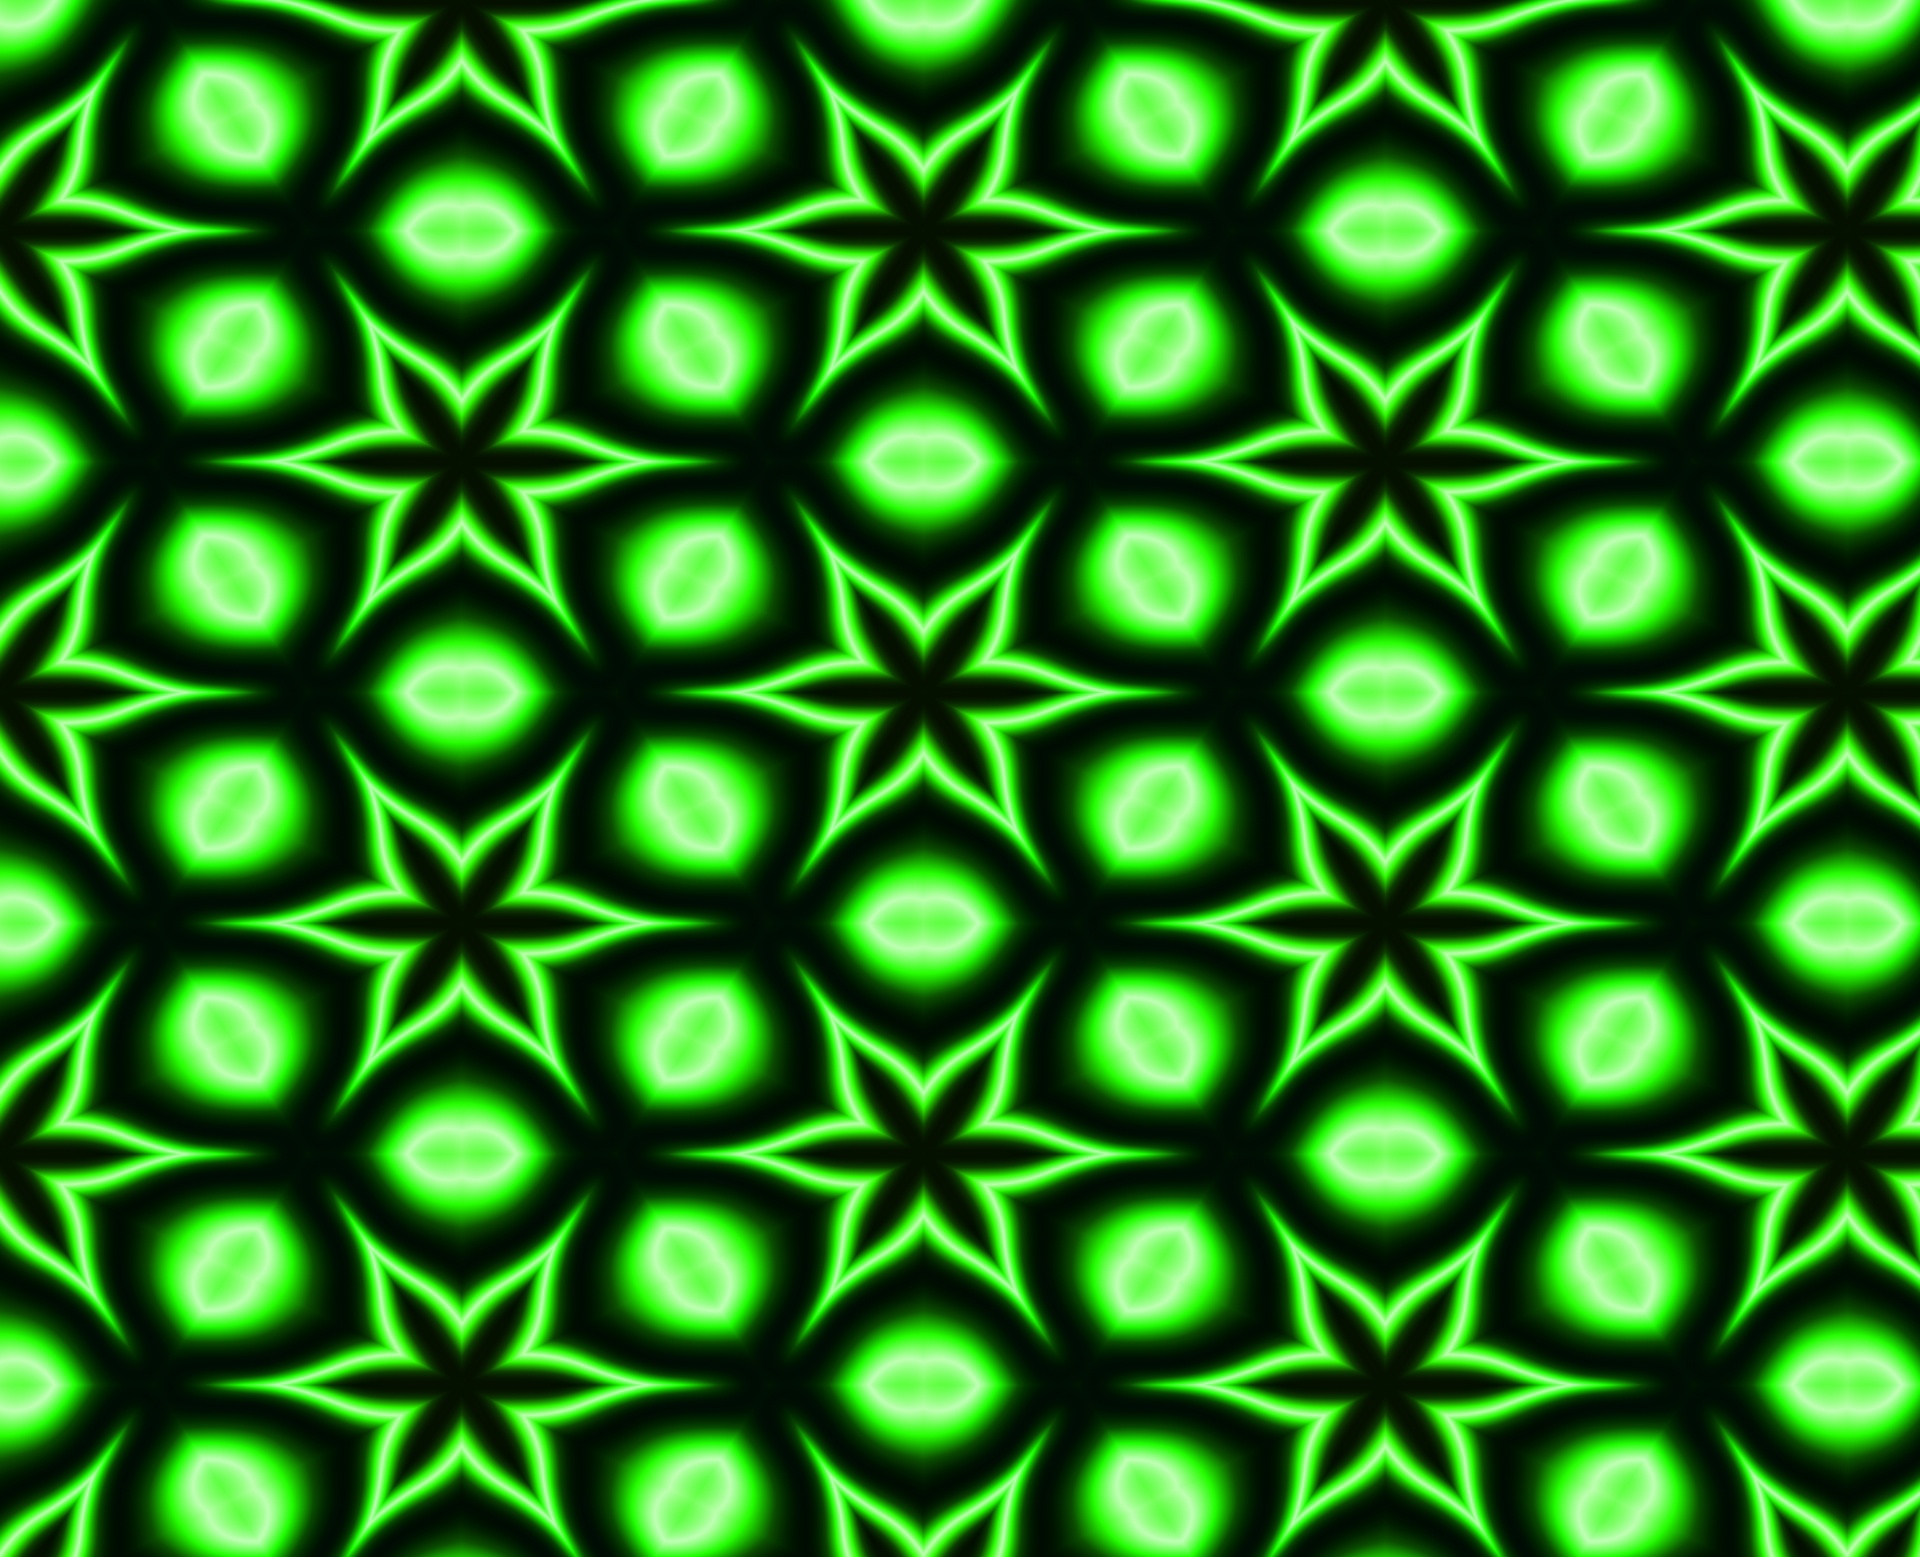 Green Stars